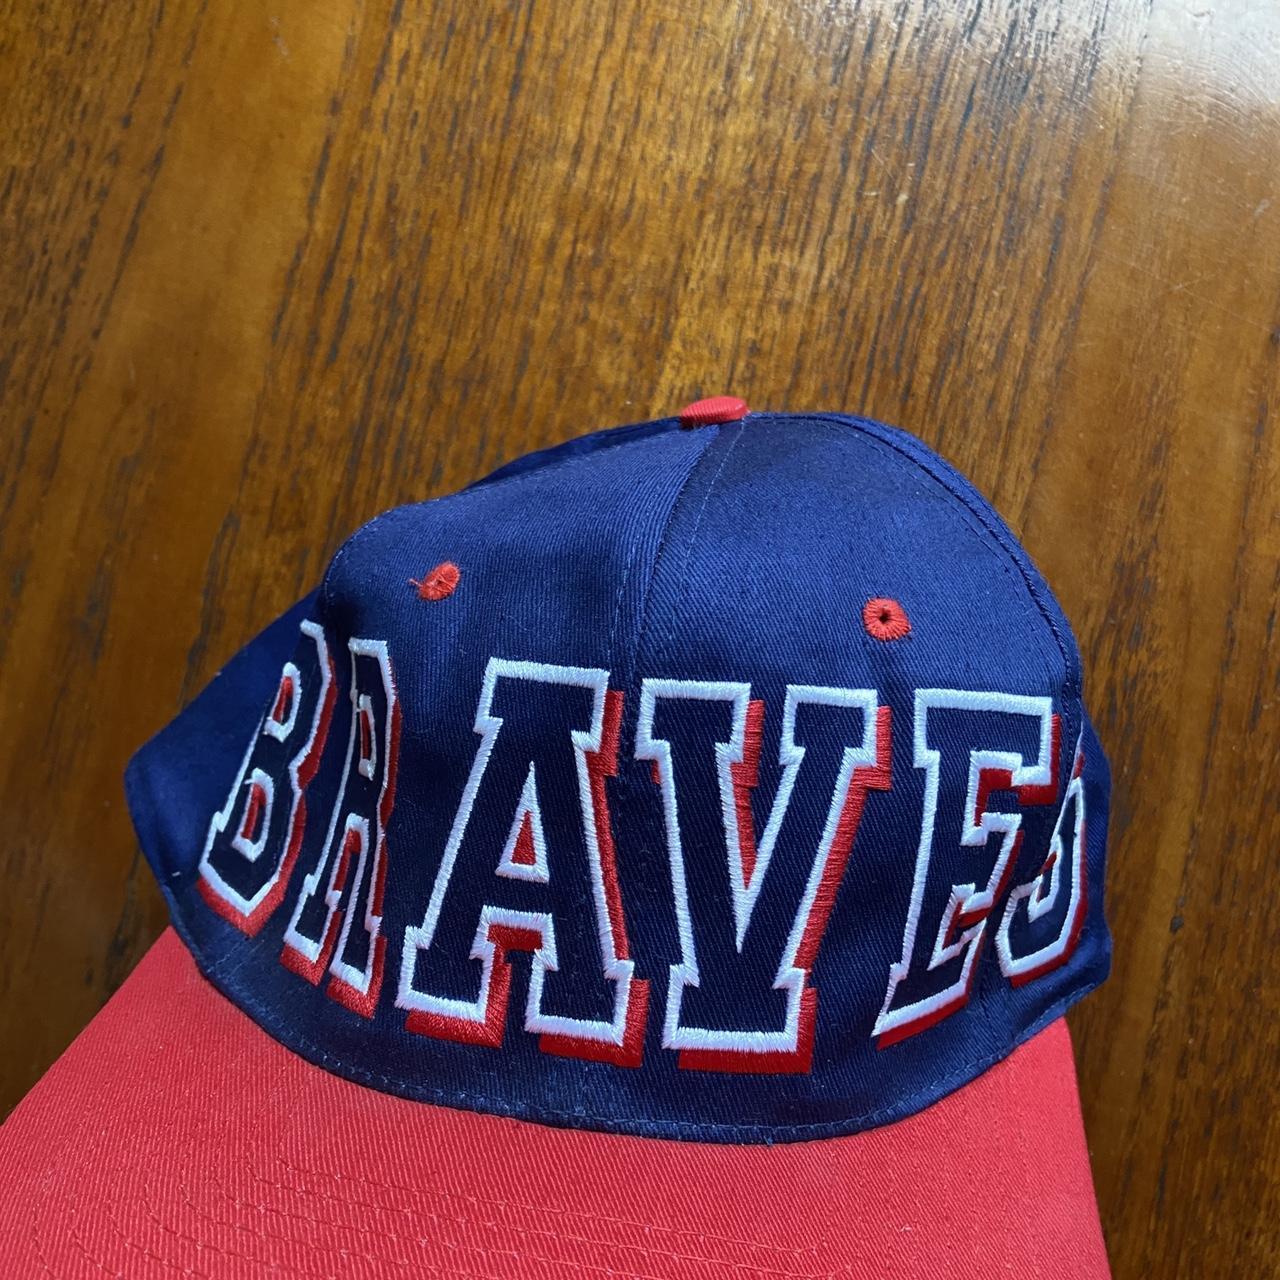 MLB Hat ╬ Vintage 90s Atlanta Braves MLB SnapBack - Depop